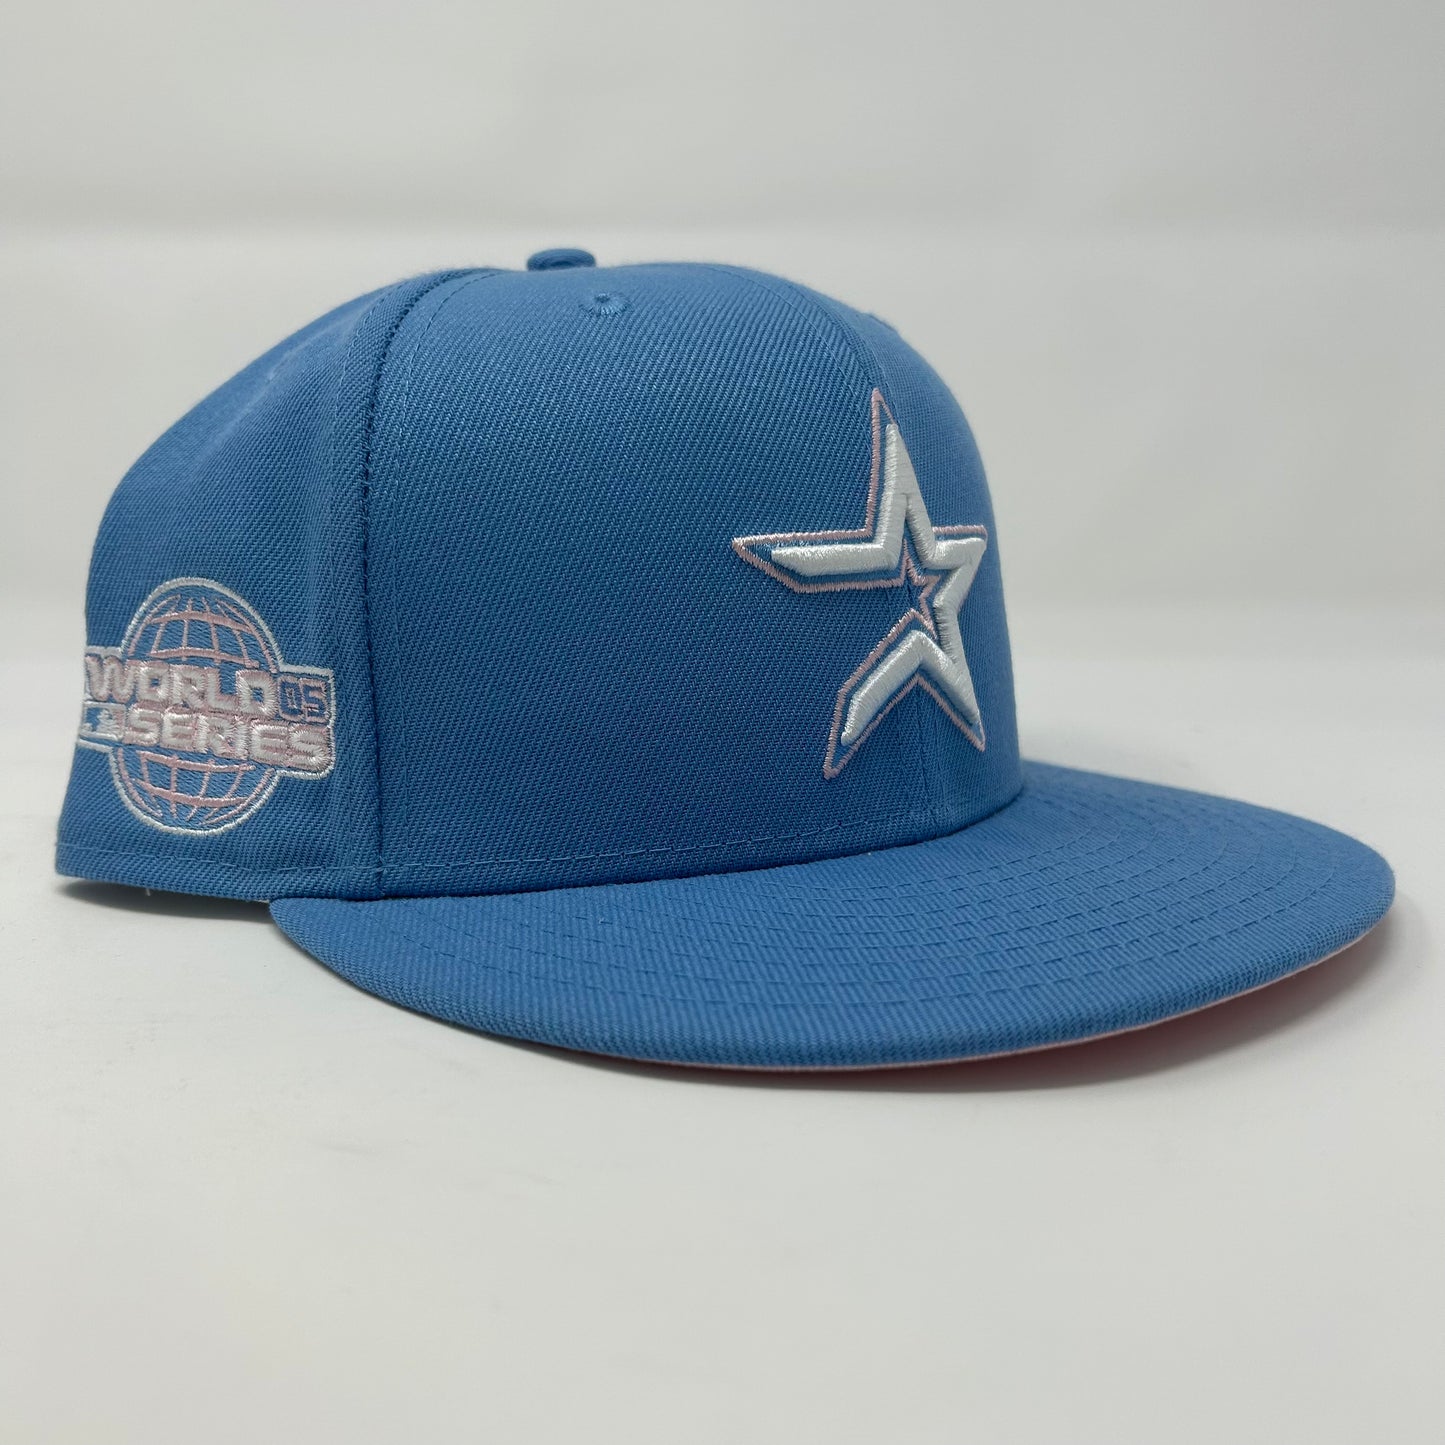 Houston Astros “Cotton Candy” Hat